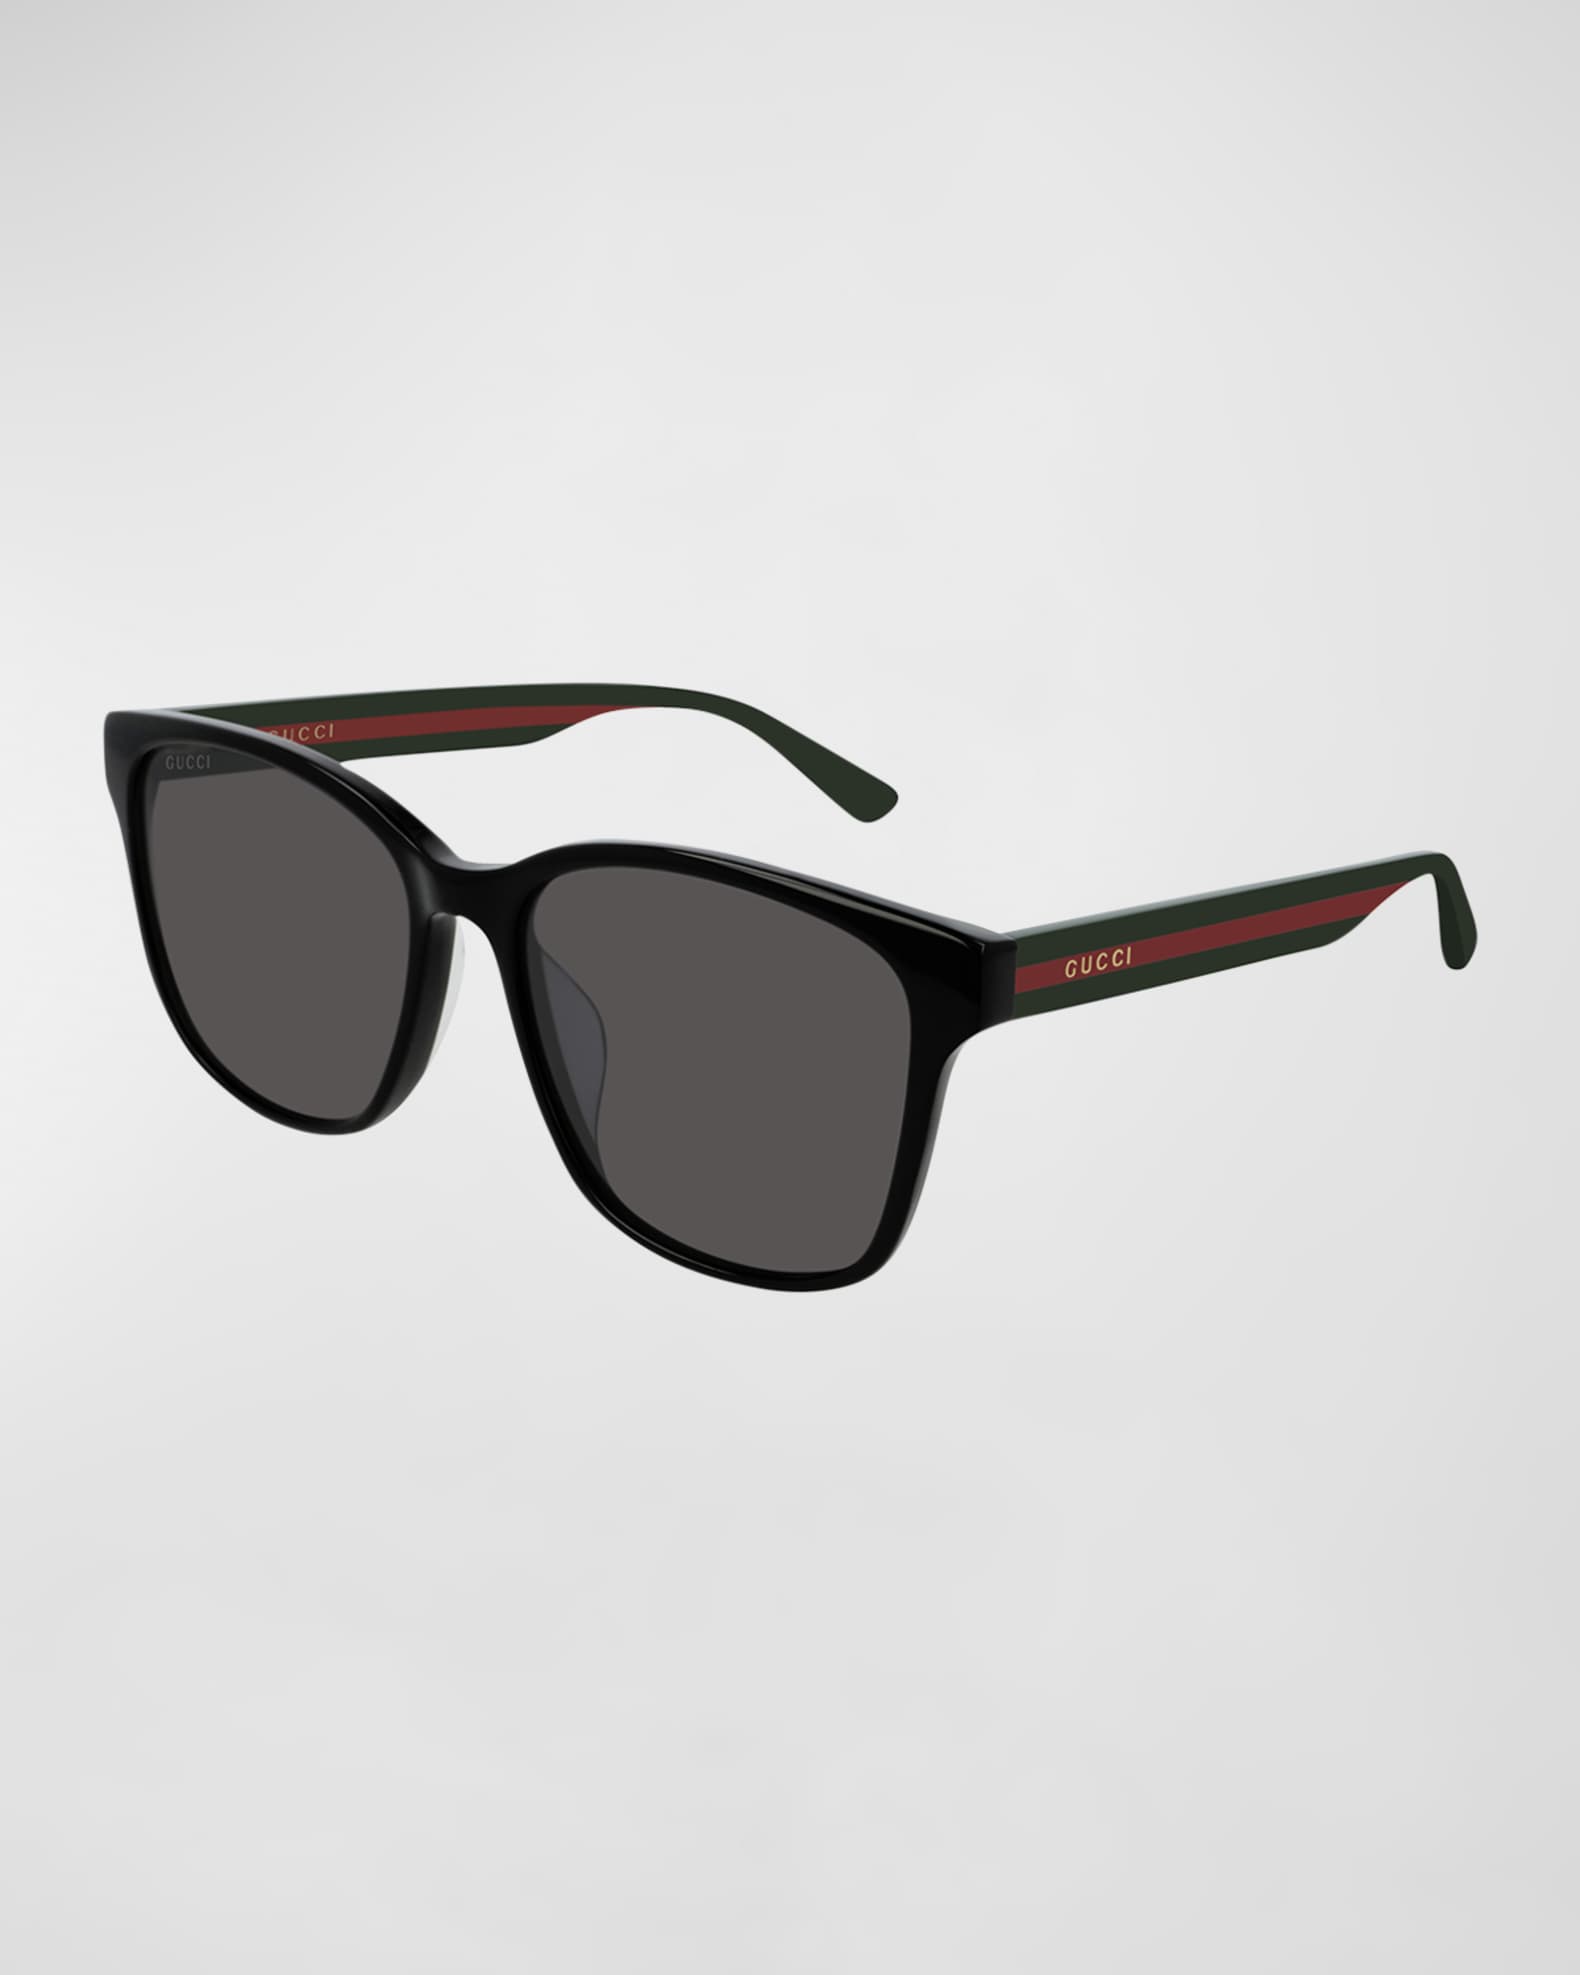 Gucci Men's Square Acetate Sunglasses with Signature Web | Neiman Marcus